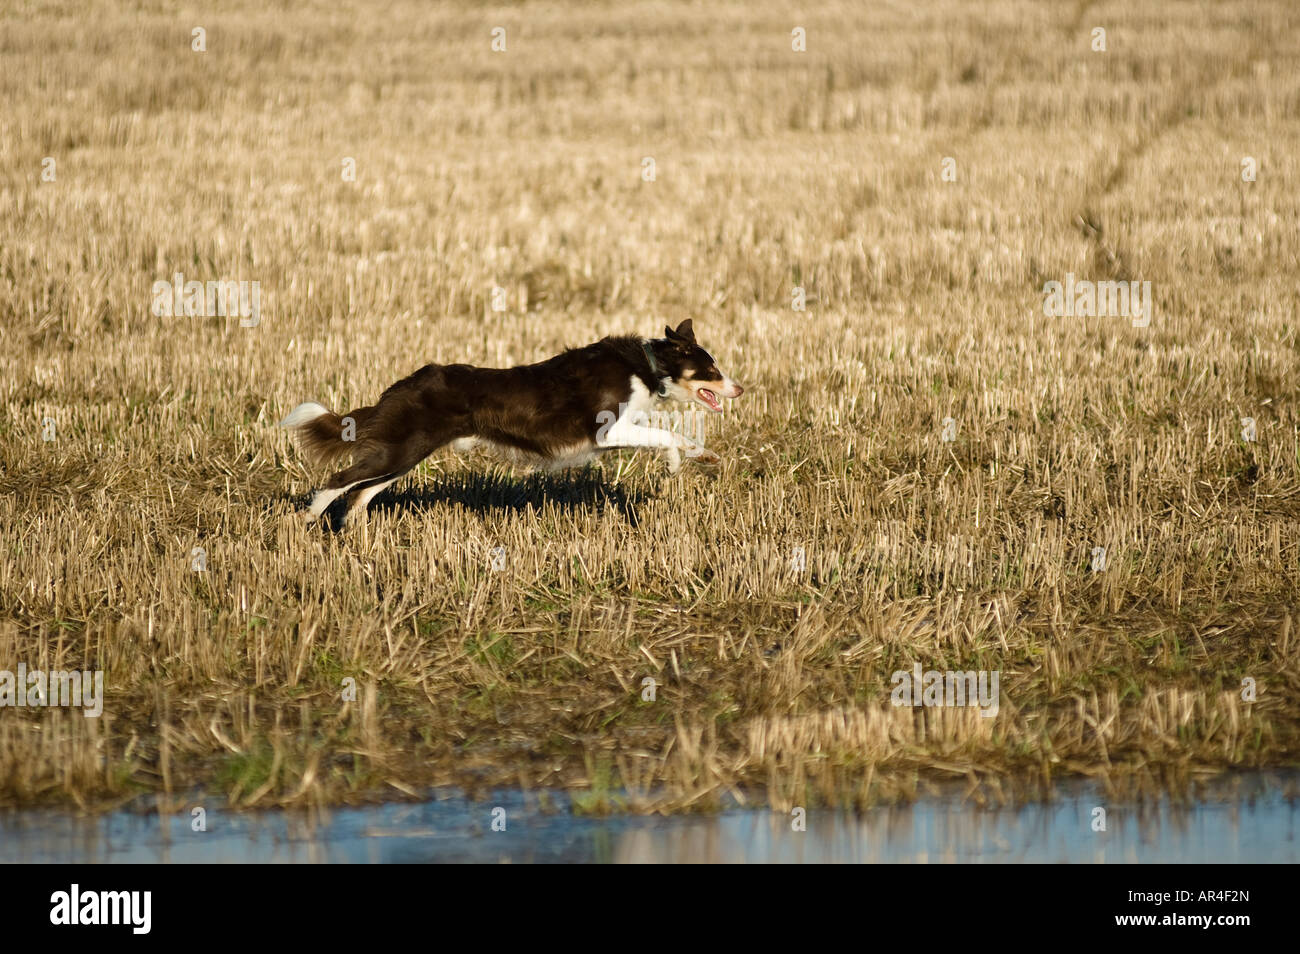 Brown border collie dog running through stubble field Stock Photo